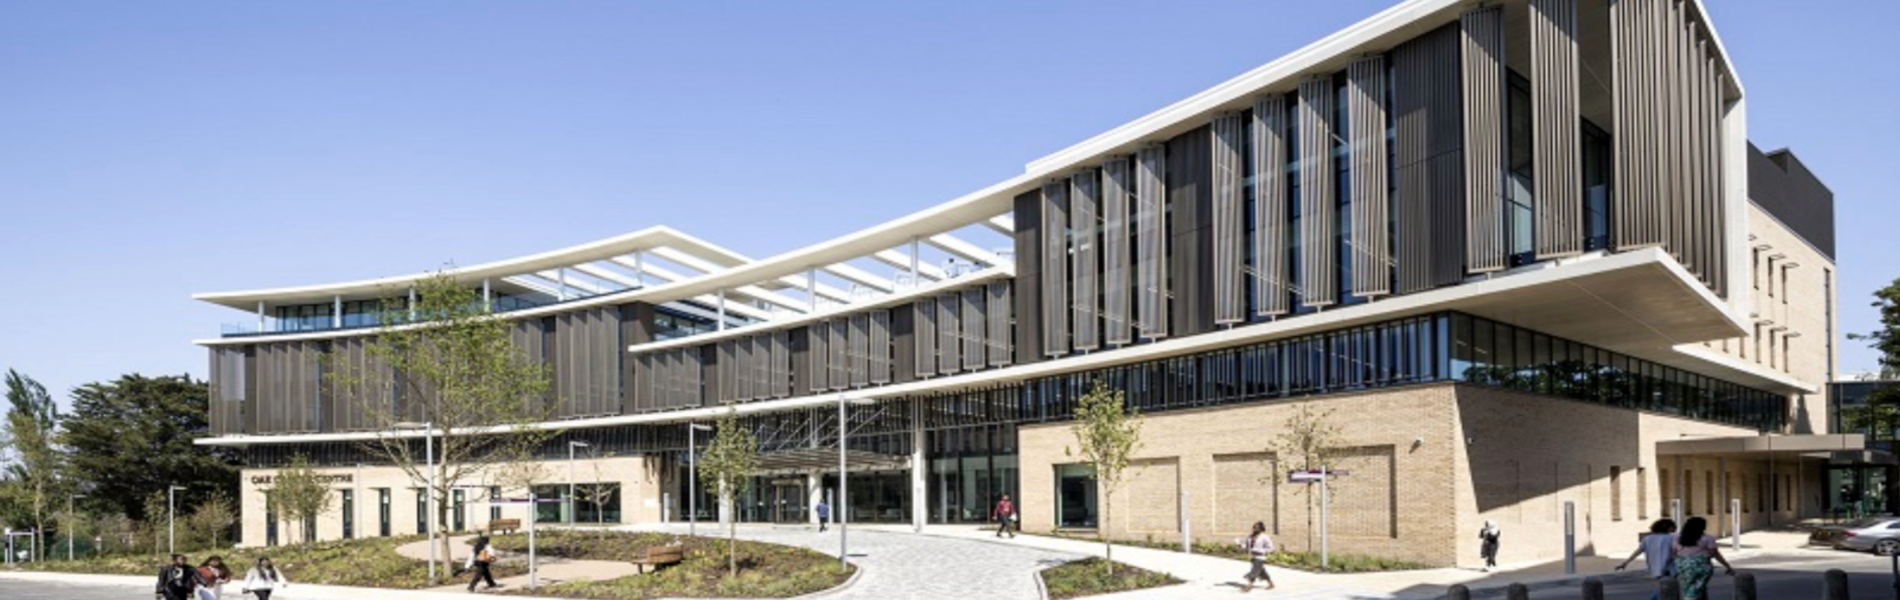 The Royal Marsden's new Oak Cancer Centre